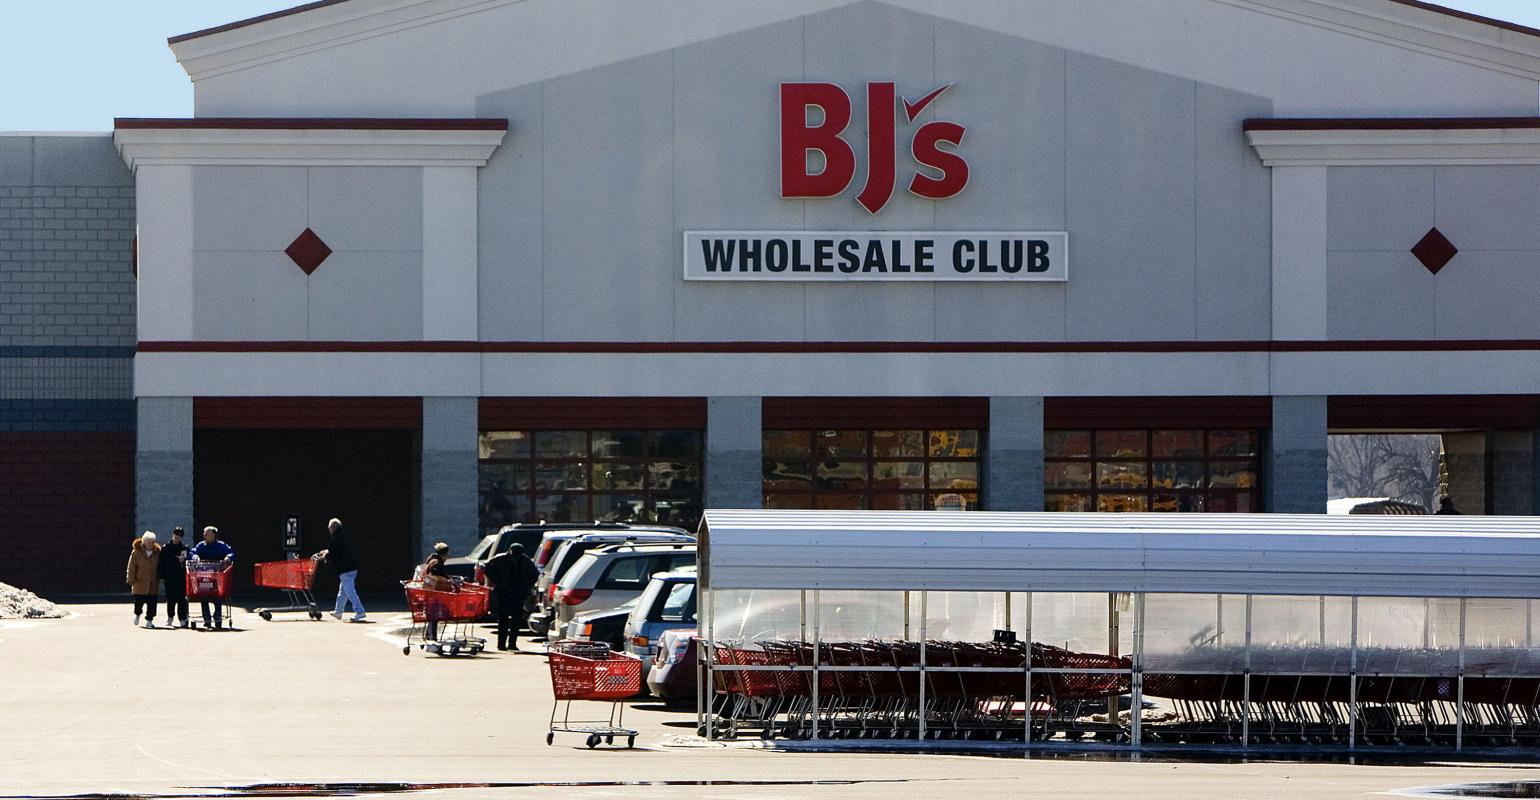 Press Release: BJ's Wholesale Club Completes Headquarters